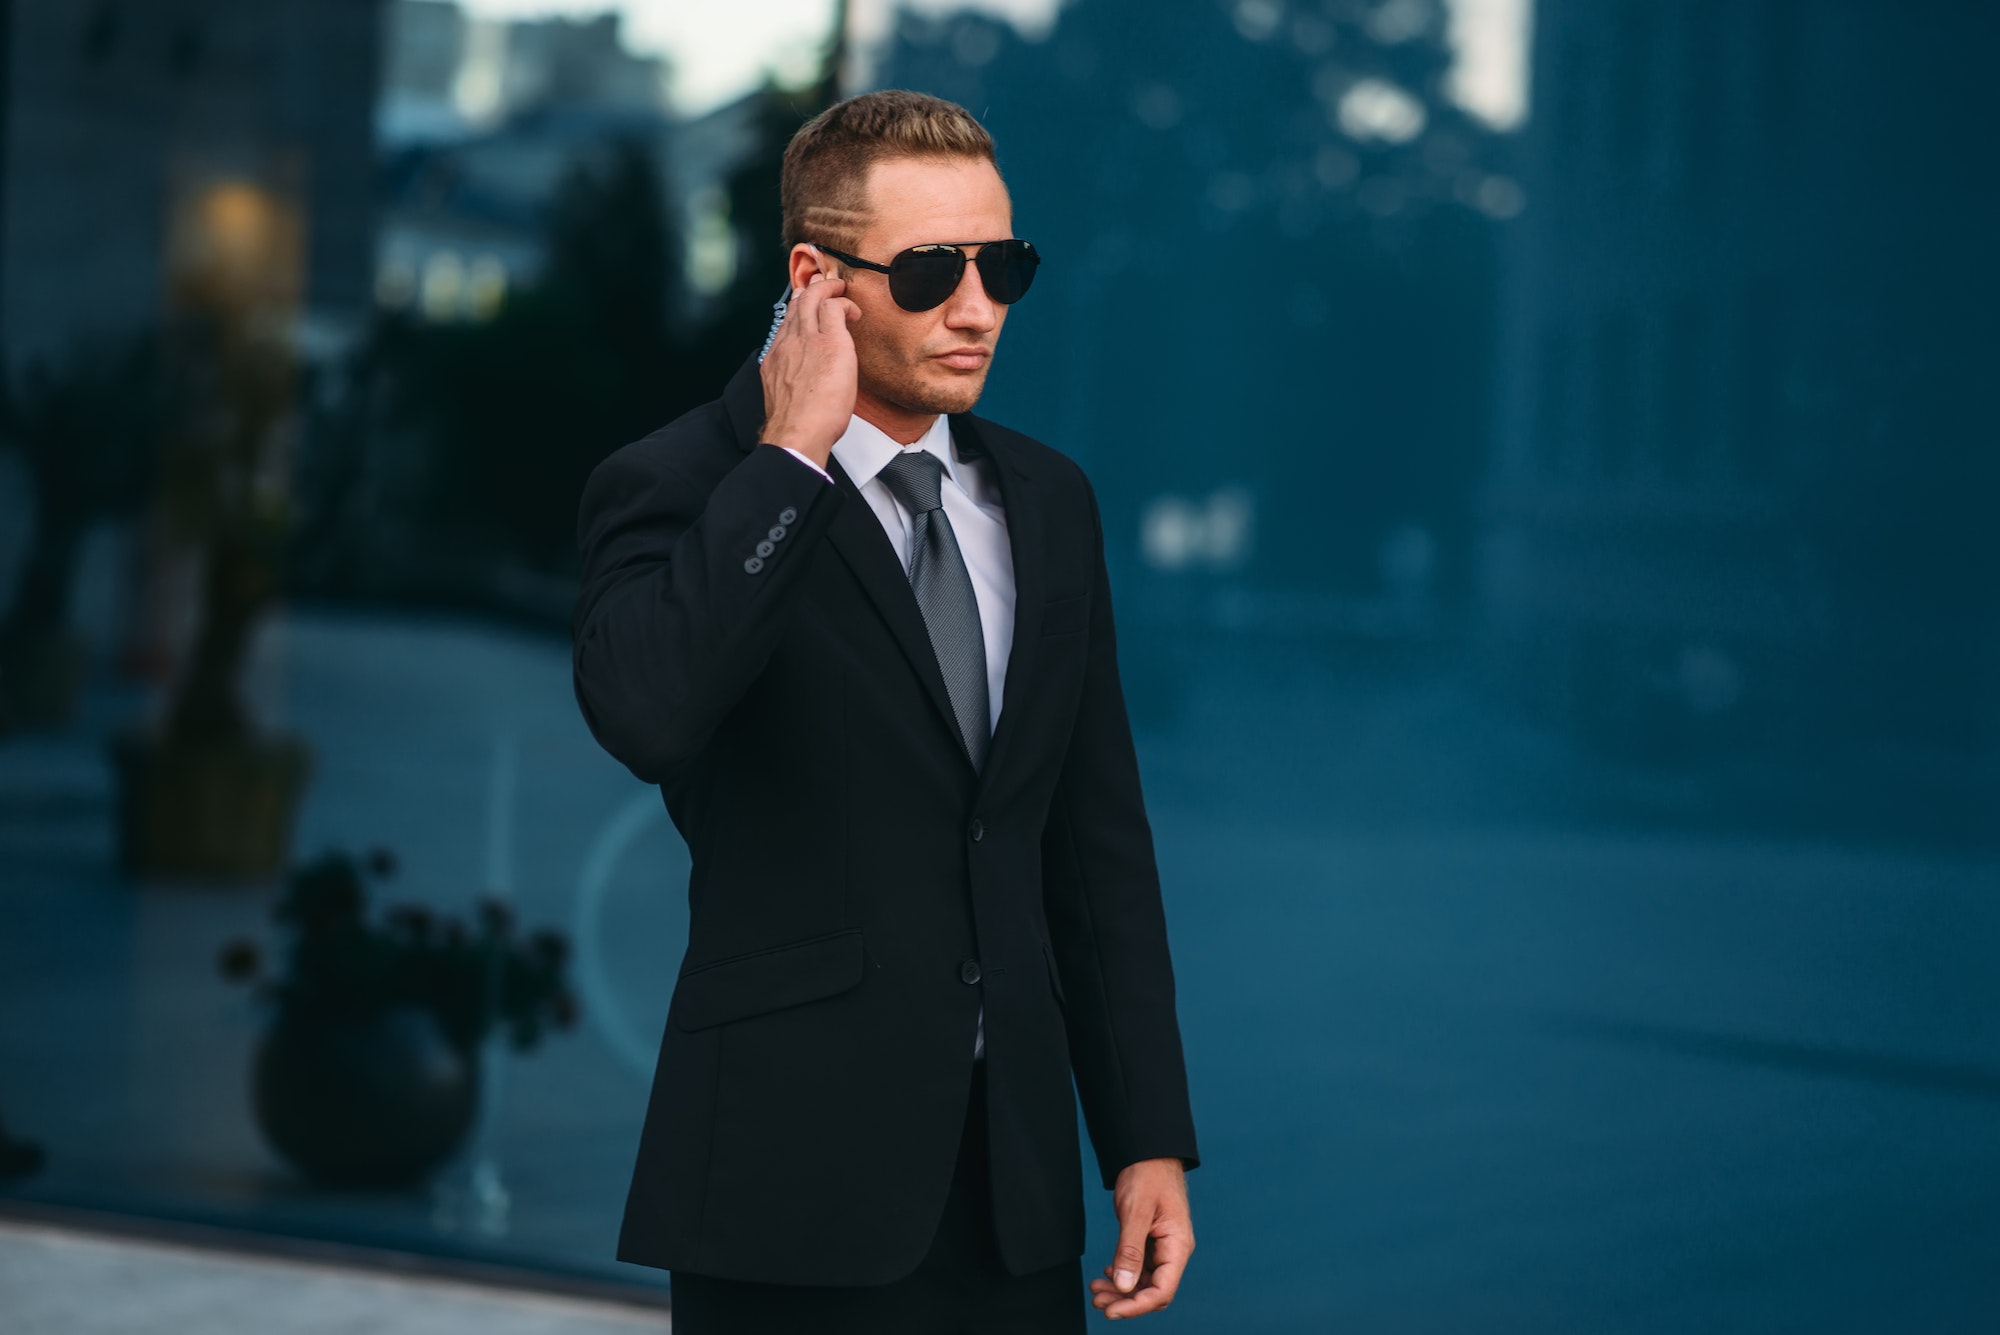 Male bodyguard uses security earpiece outdoors